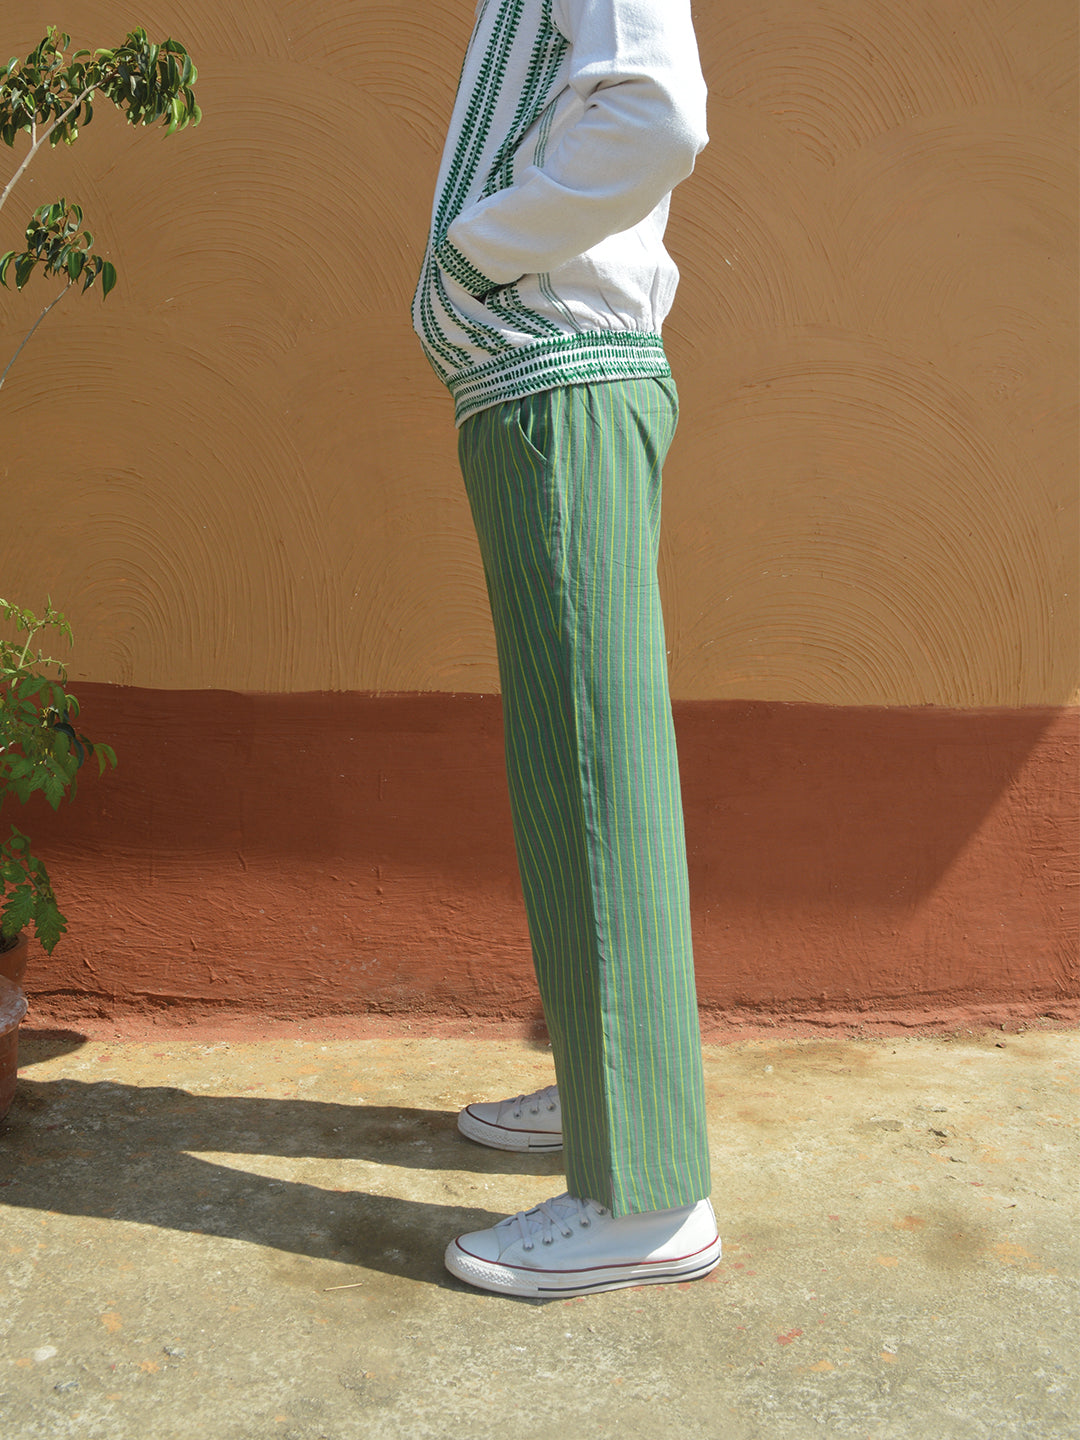 Striped Cotton Unisex Trousers